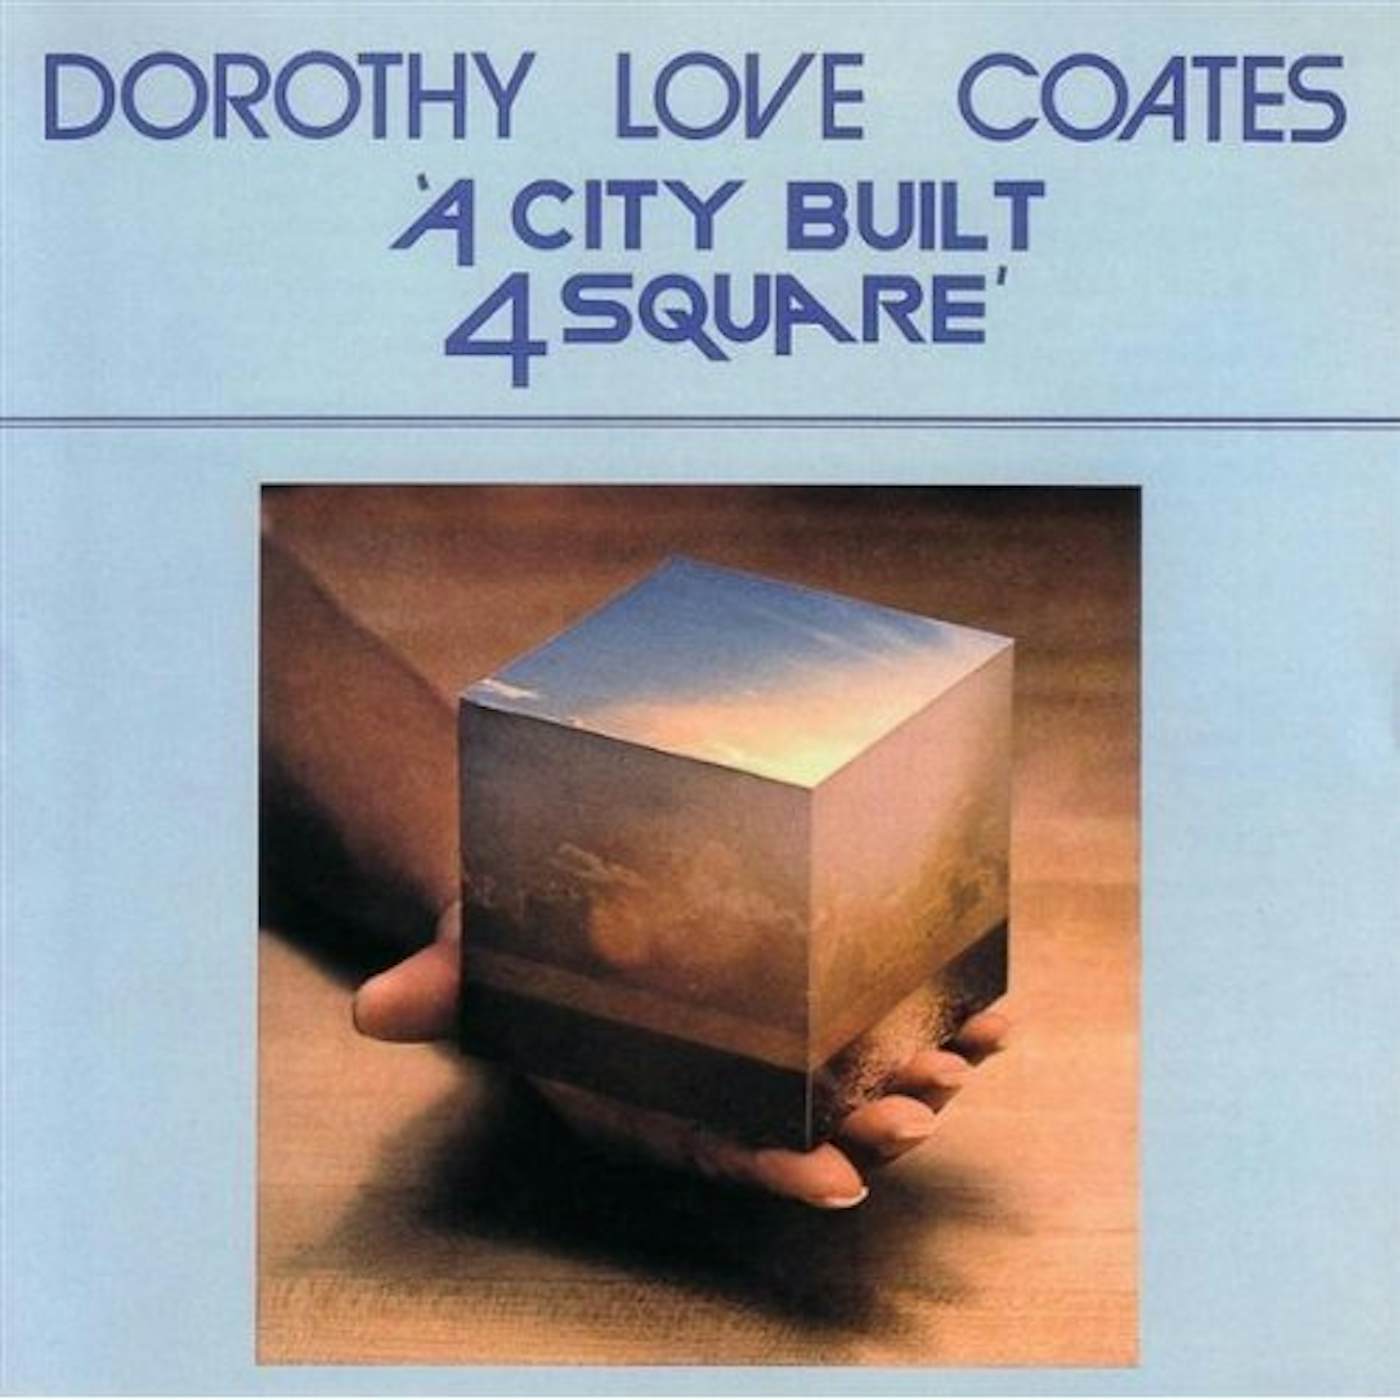 Dorothy Love Coates CITY BUILT 4 SQUARE CD